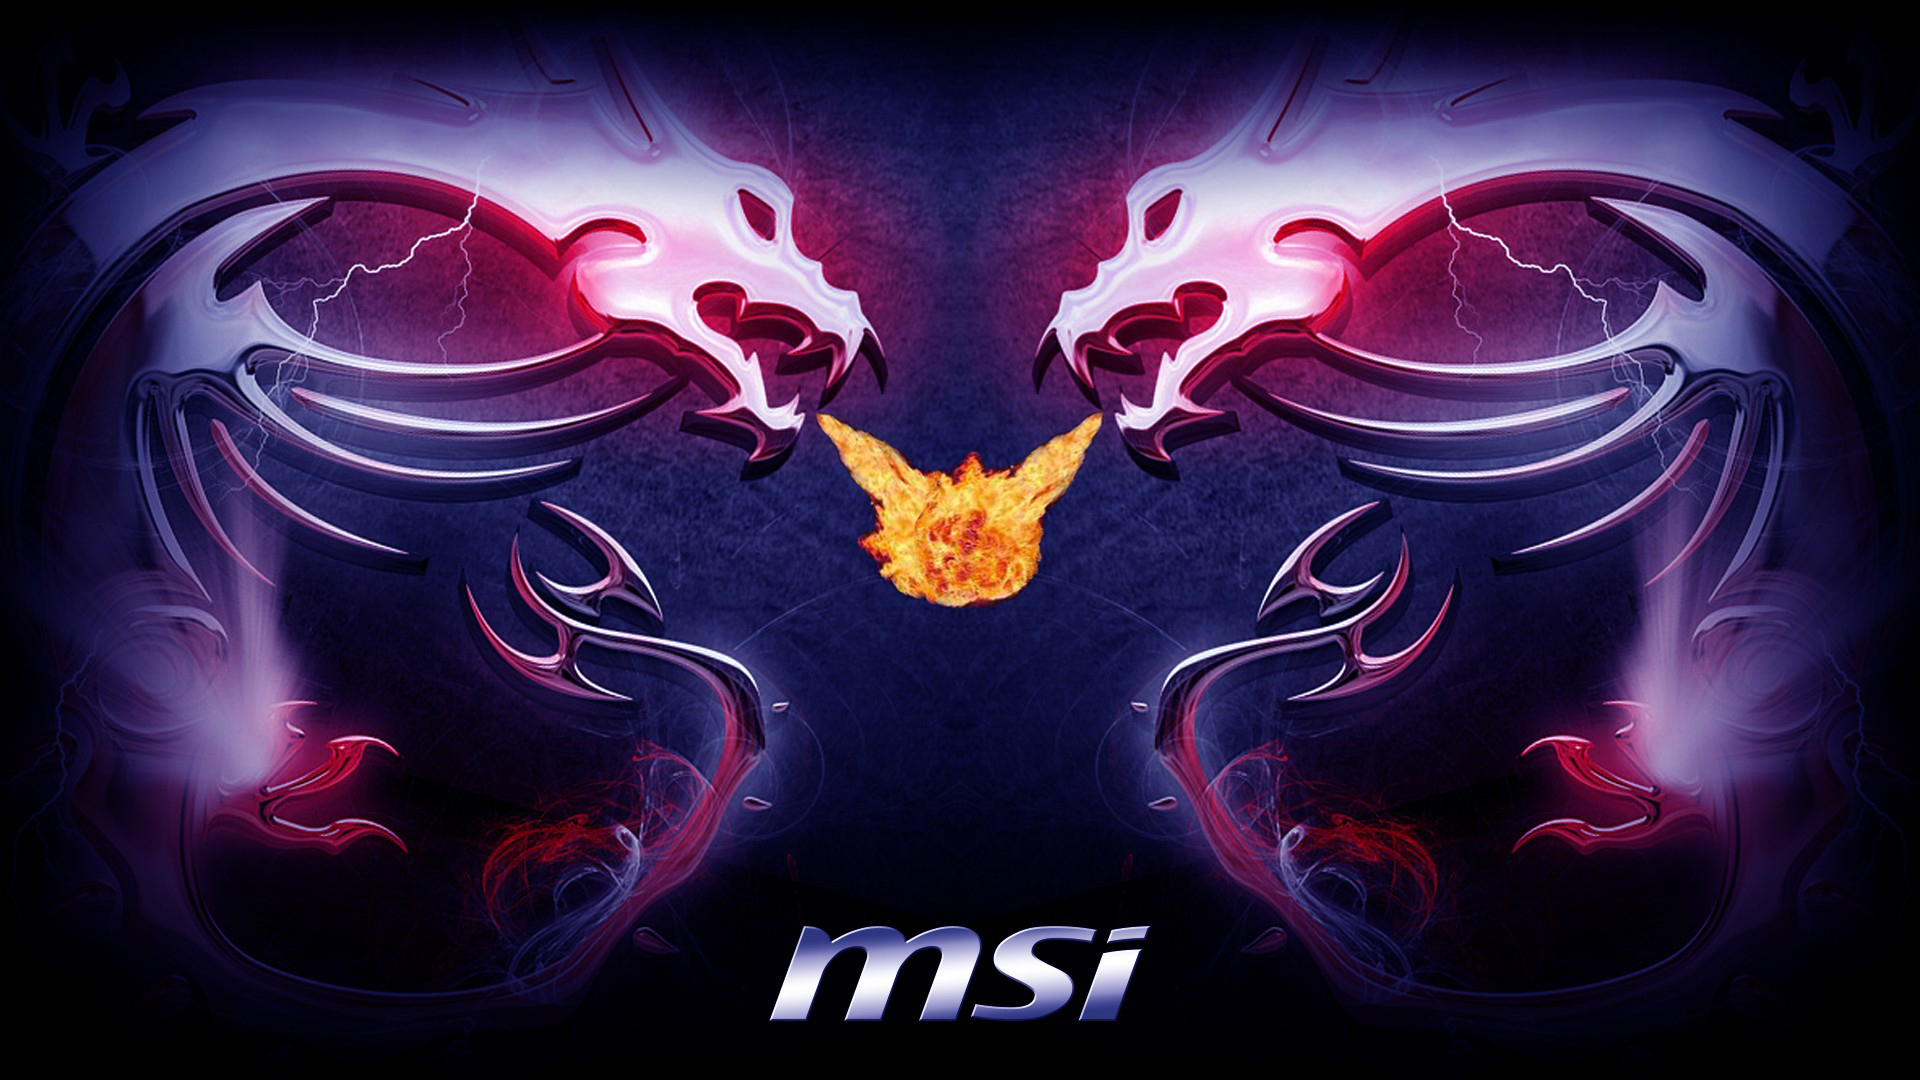 msi twin dragon logo fire flame breath hd 1920x1080 1080p wallpaper